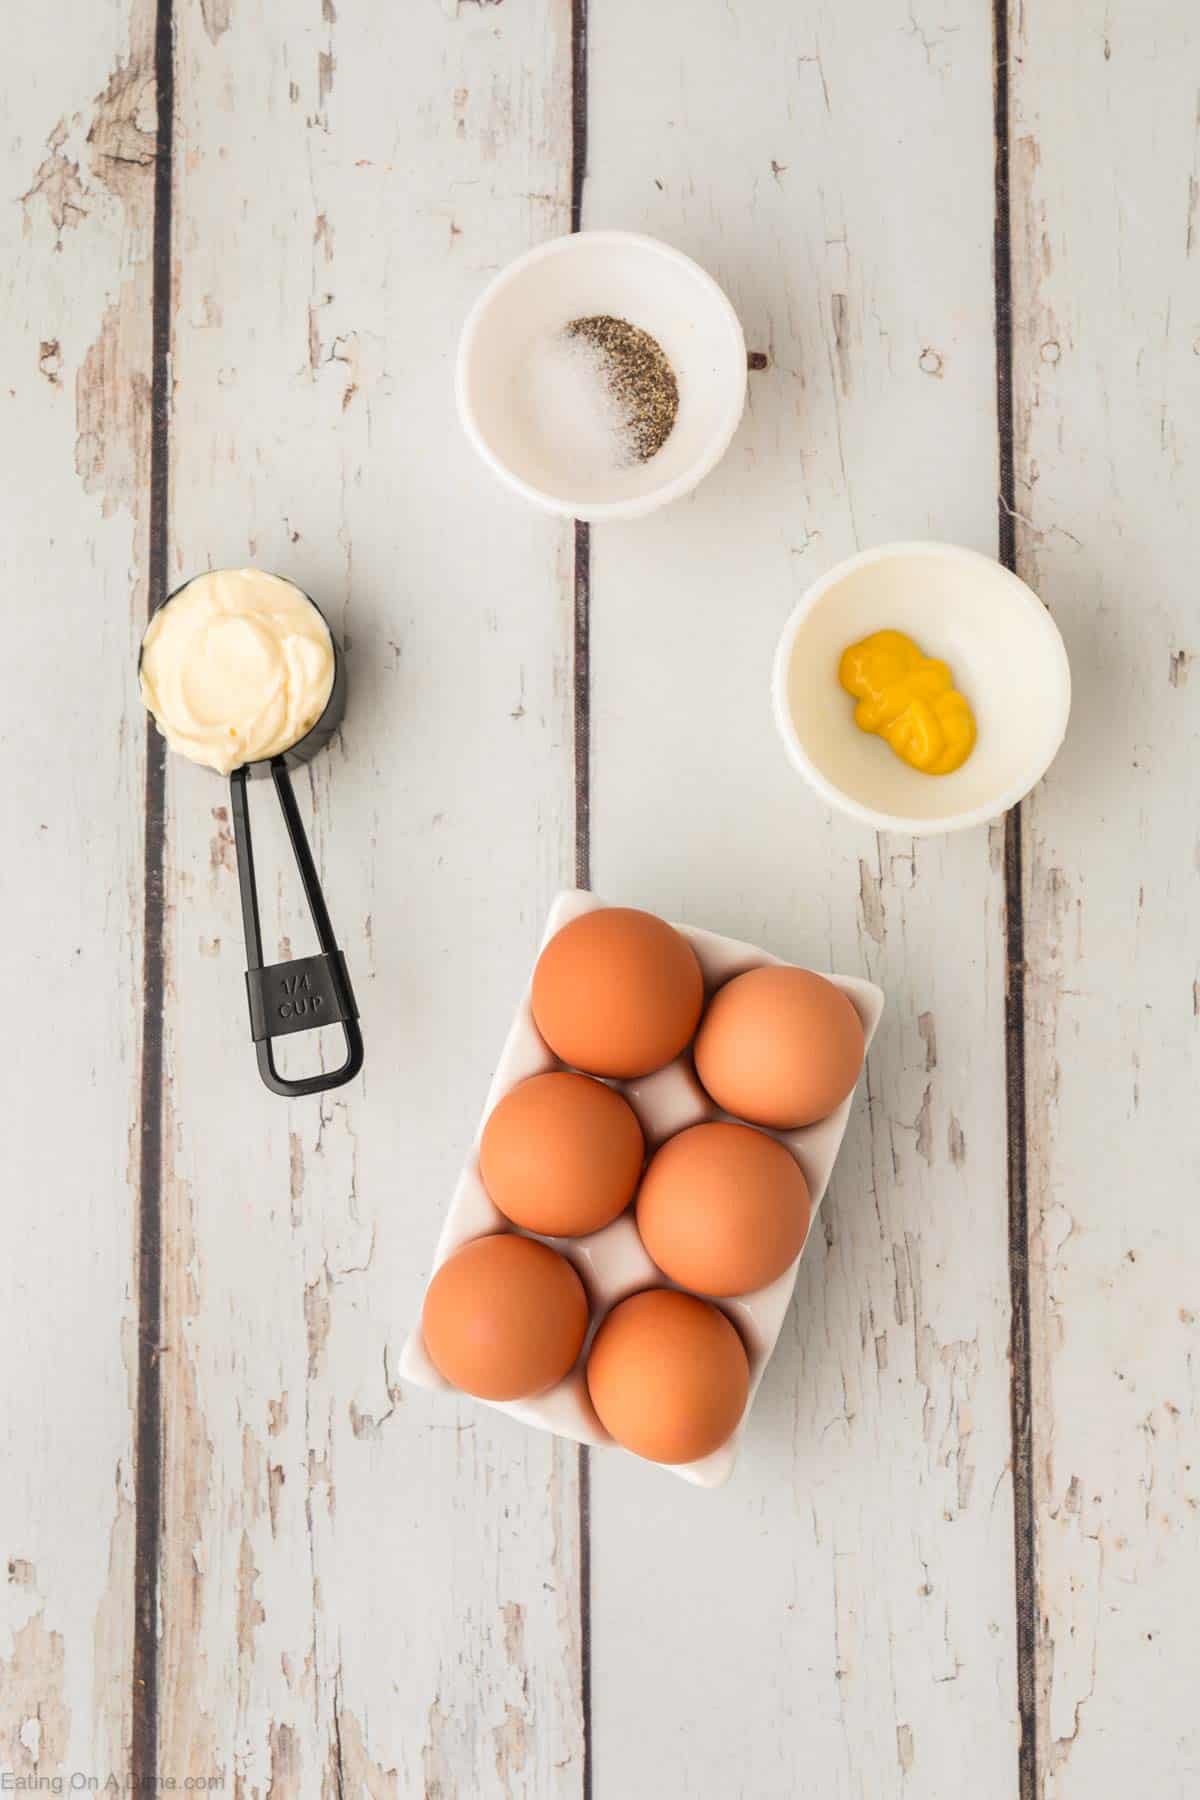 Deviled Eggs ingredients - hard boiled eggs, mayonnaise, mustard, salt and pepper, paprika